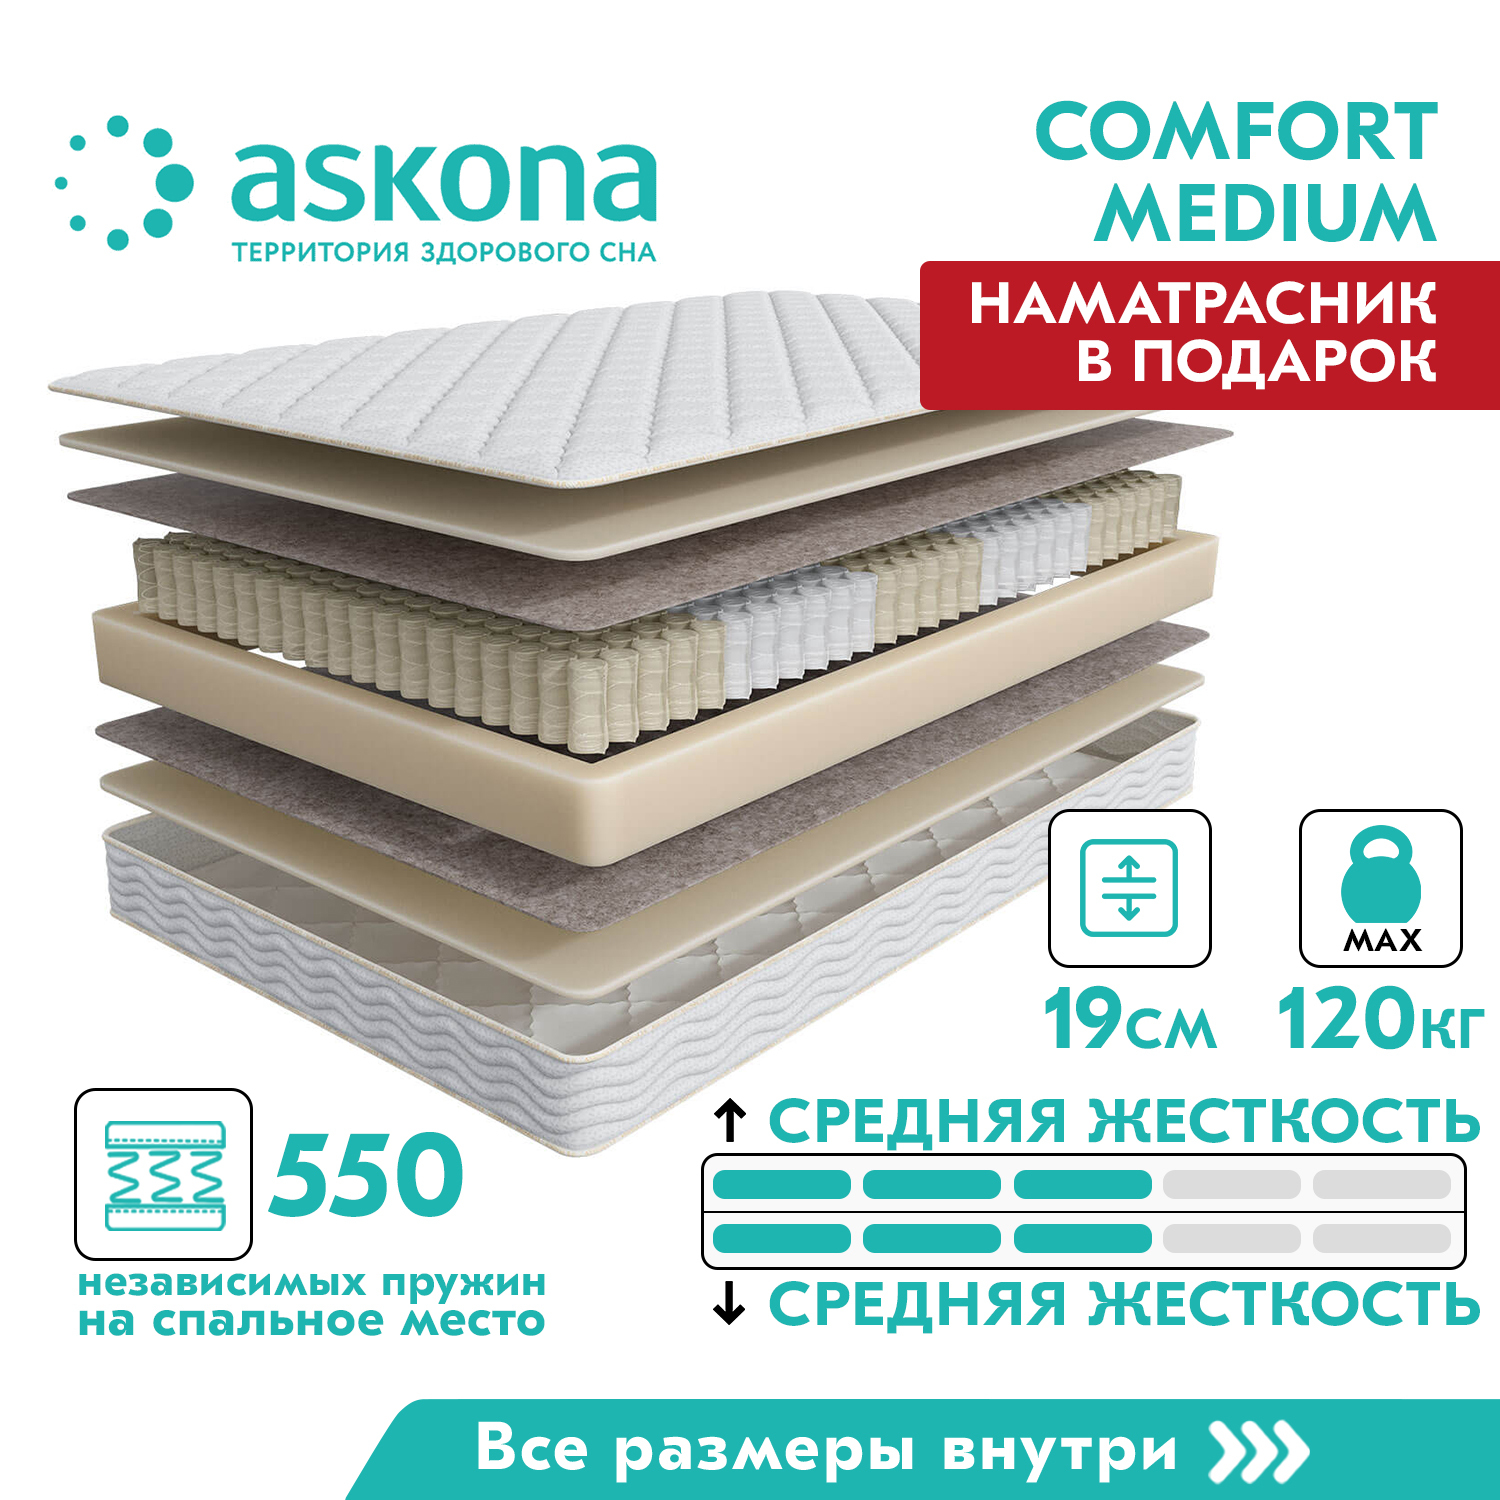 Askona Comfort Medium